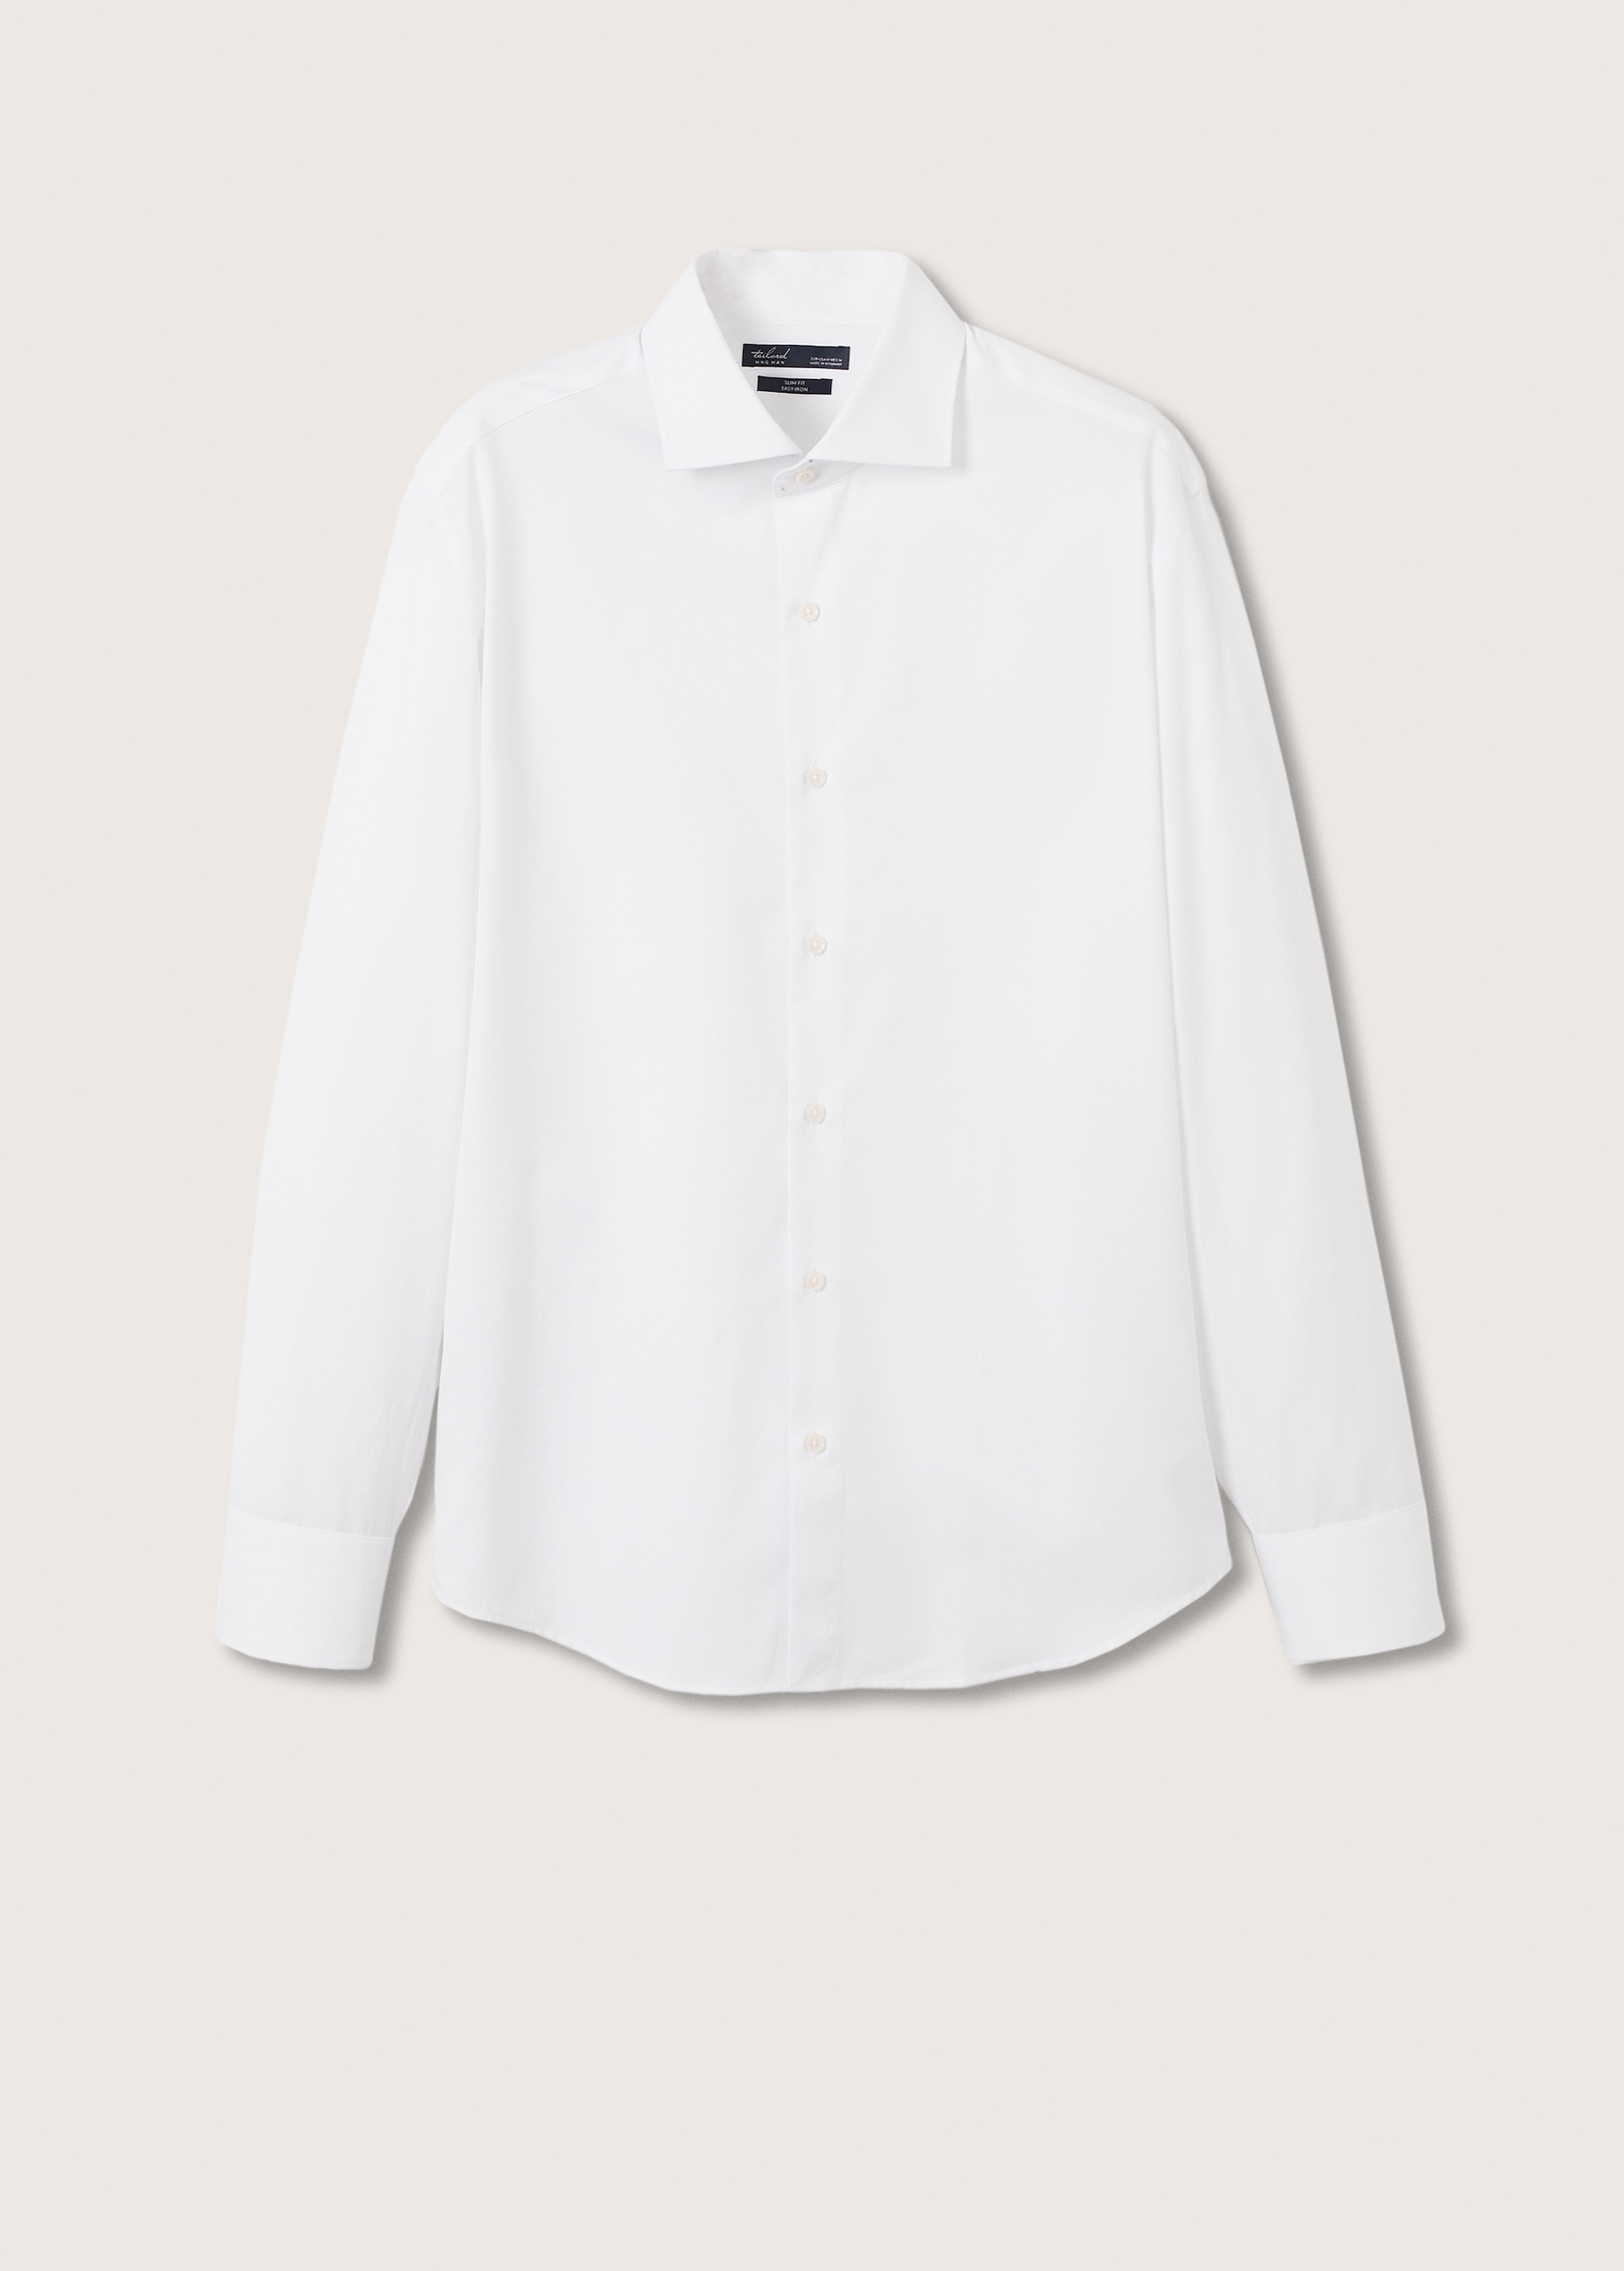 Slim fit cotton suit shirt - Article without model